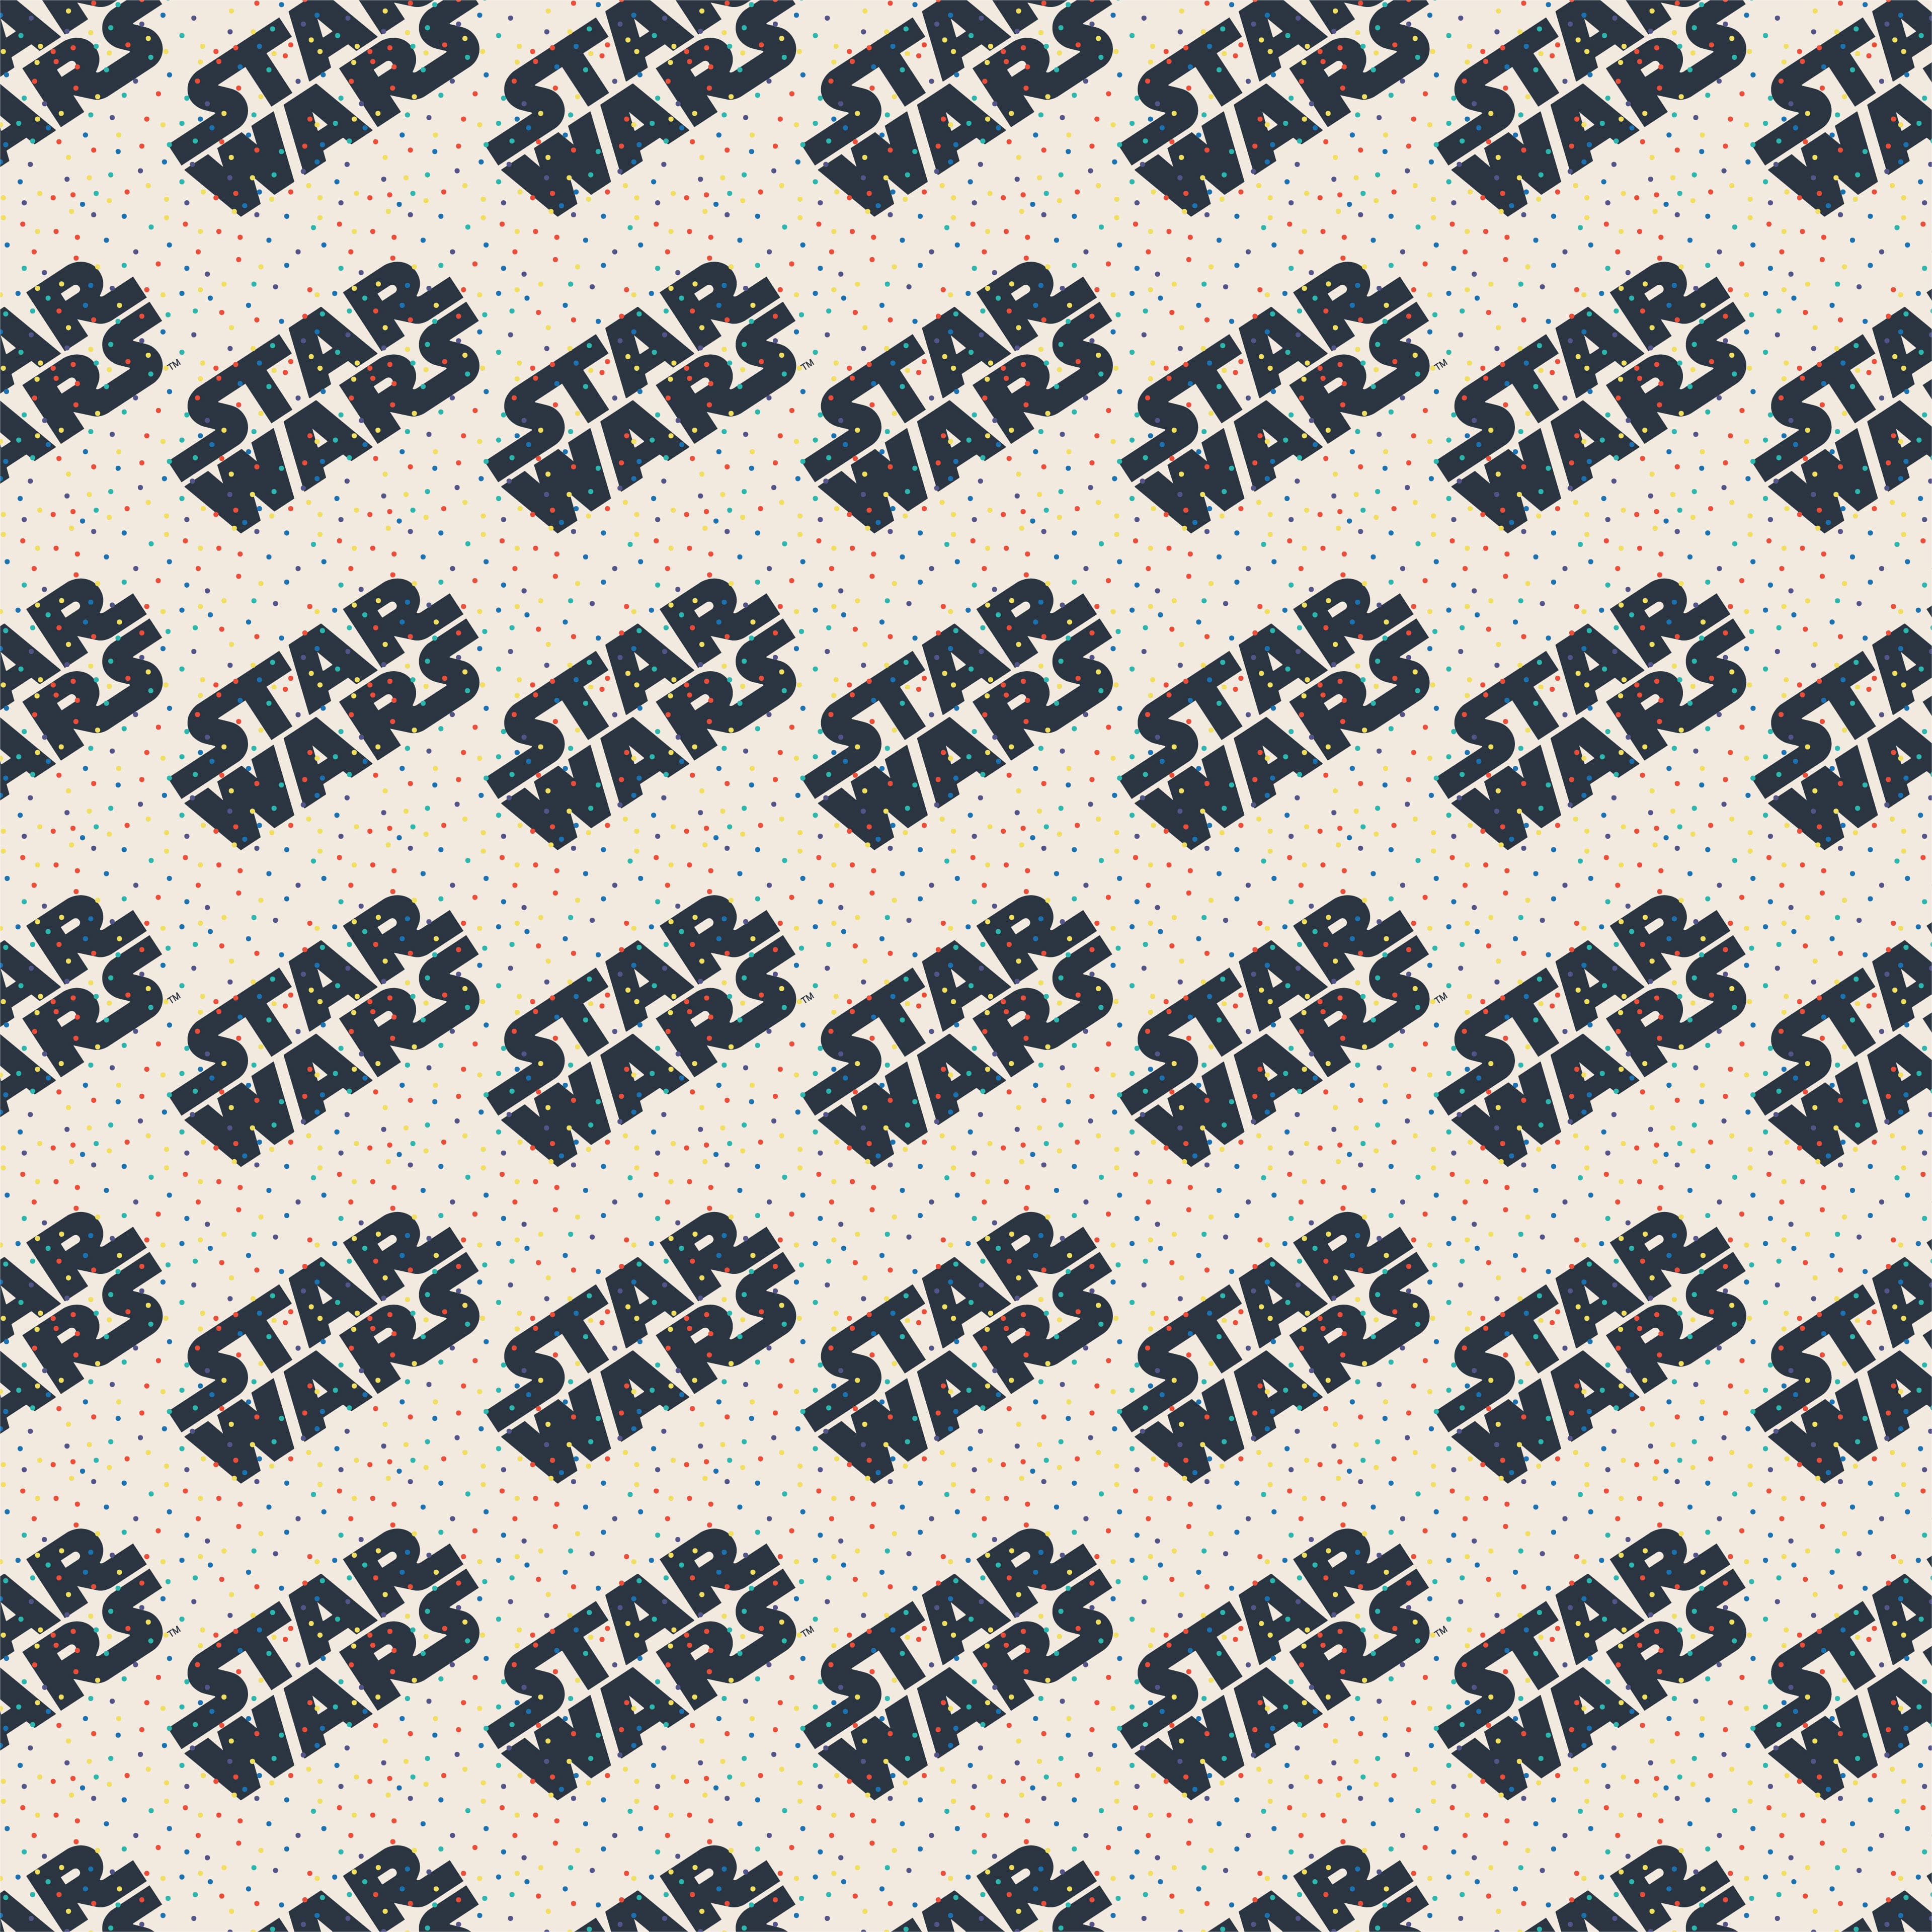 Star Wars&#x2122; Logo &#x26; Tiny Dots Cotton Fabric